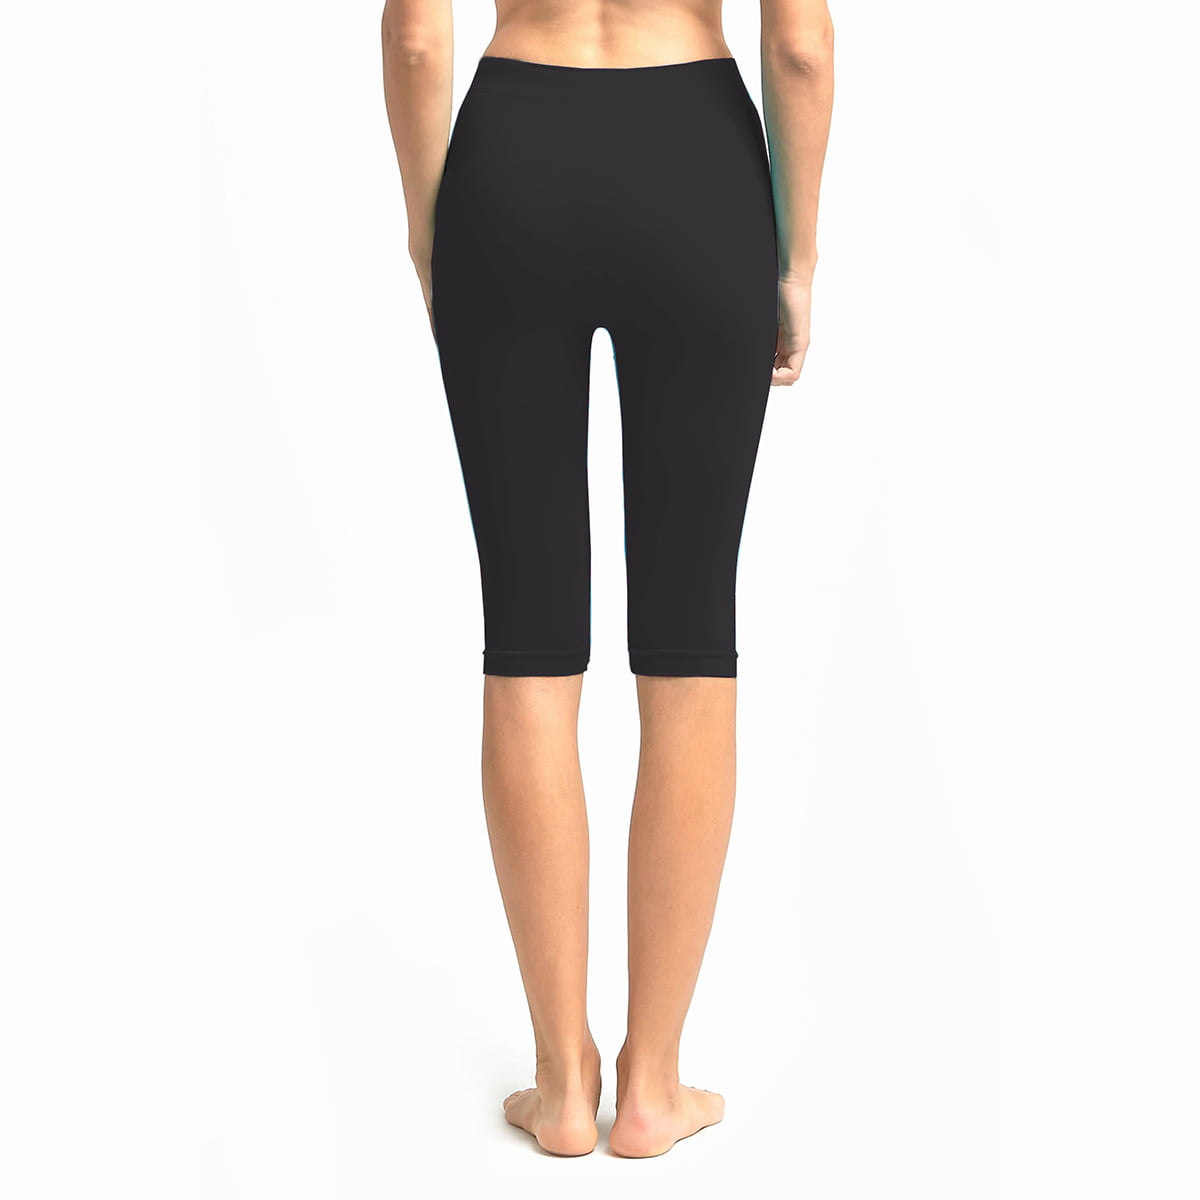 DailyWear Womens Solid Knee Length Short Yoga Cotton Leggings Navy, Small